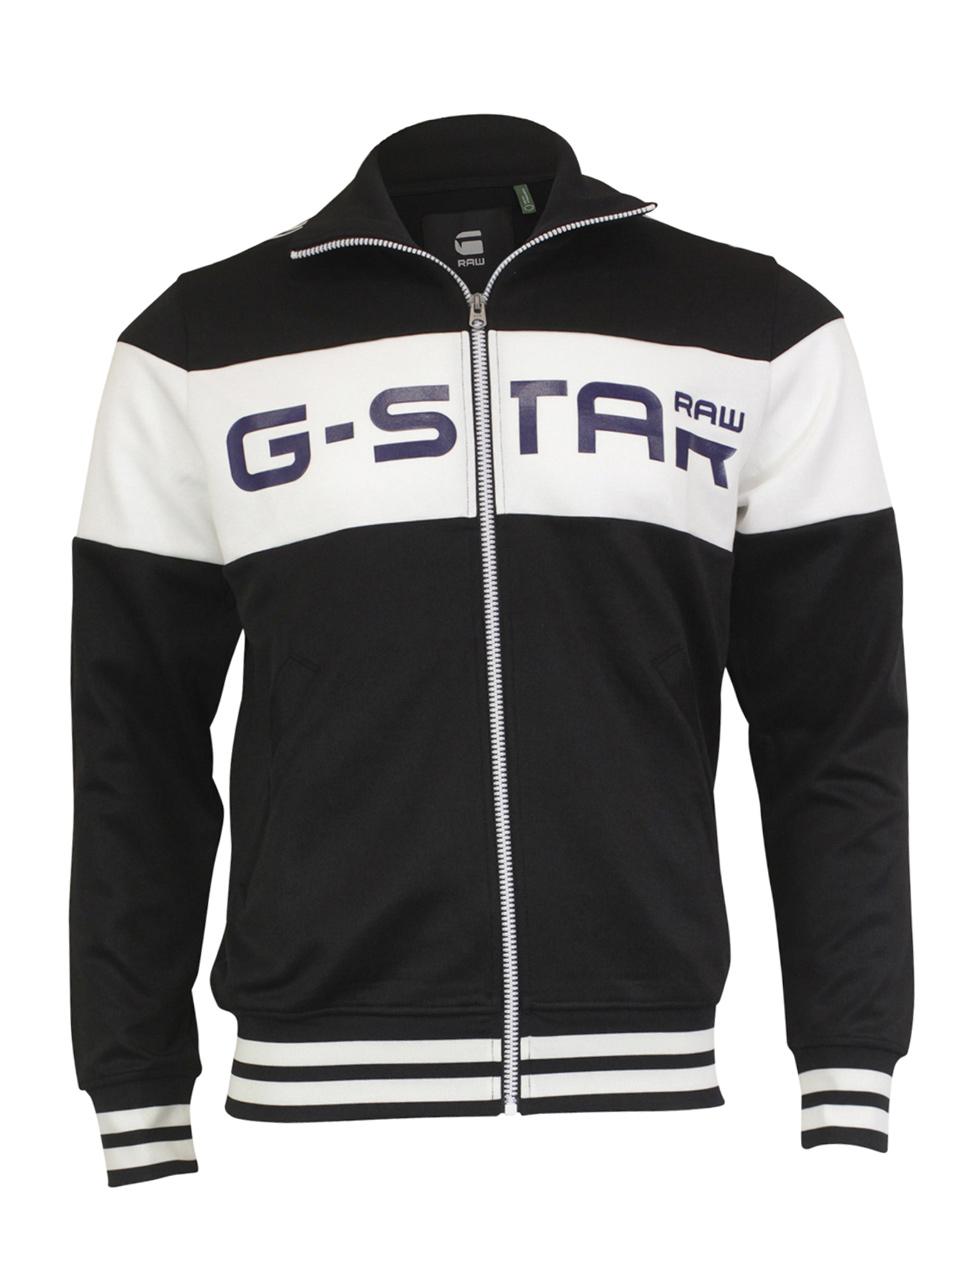 g star raw jacket